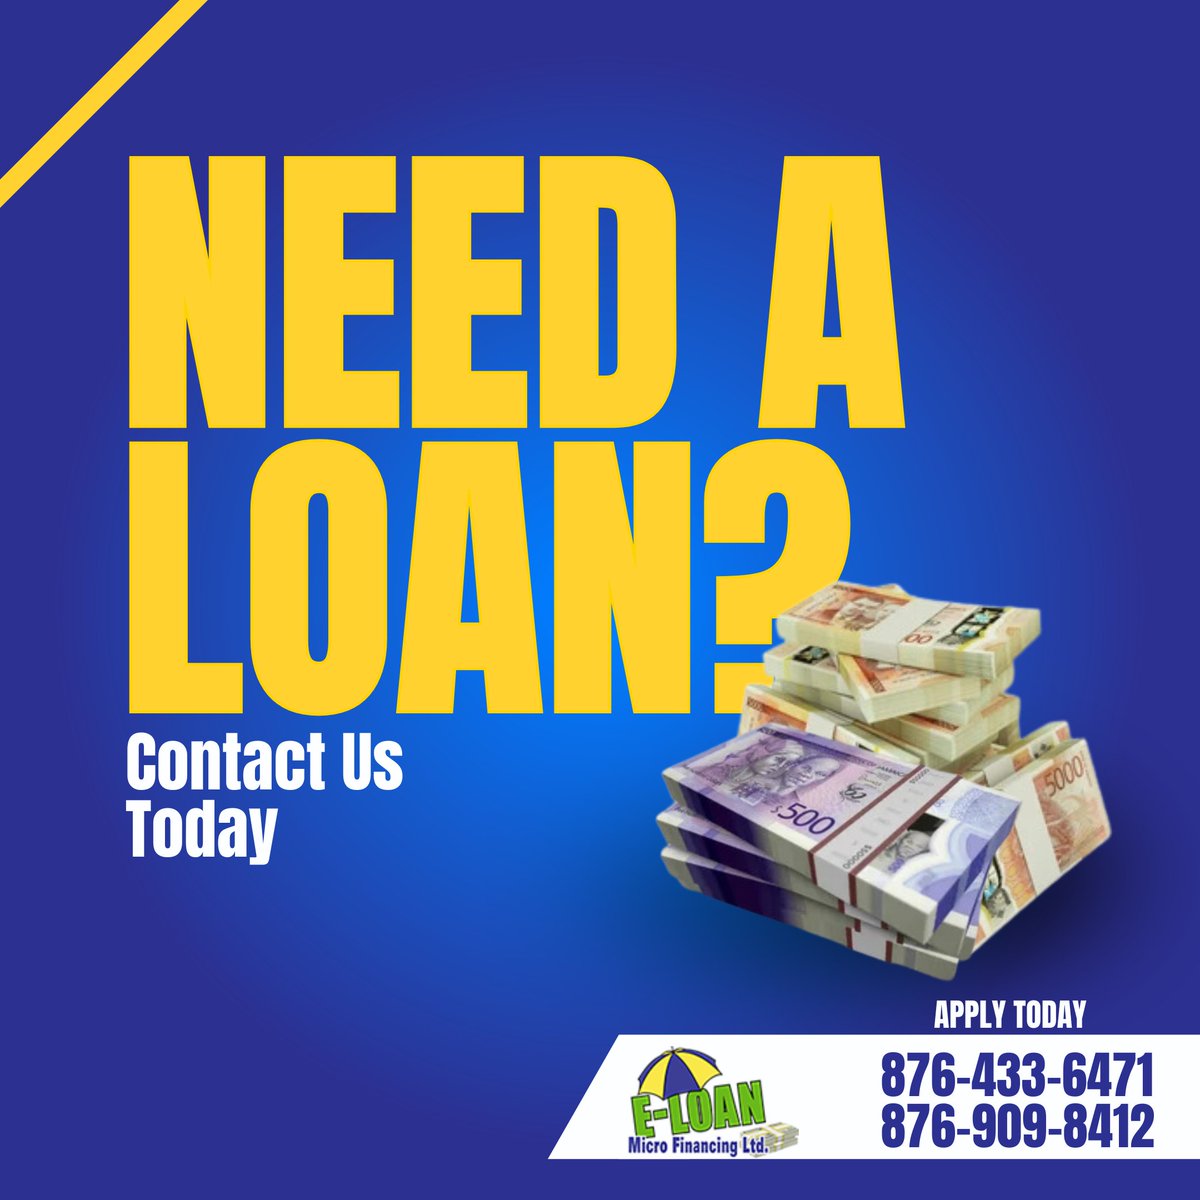 Looking for a loan? Look no further than E-Loan! Our streamlined application process allows you to apply from the comfort of your own home.

#ApplyFromHome
#EloanMFLimited #MobileLoan #Eloan876 #BestloanCompanyJamaica #BestLoancompanyMontegoBay #BestLoanCompany #LoanCompanyNearMe